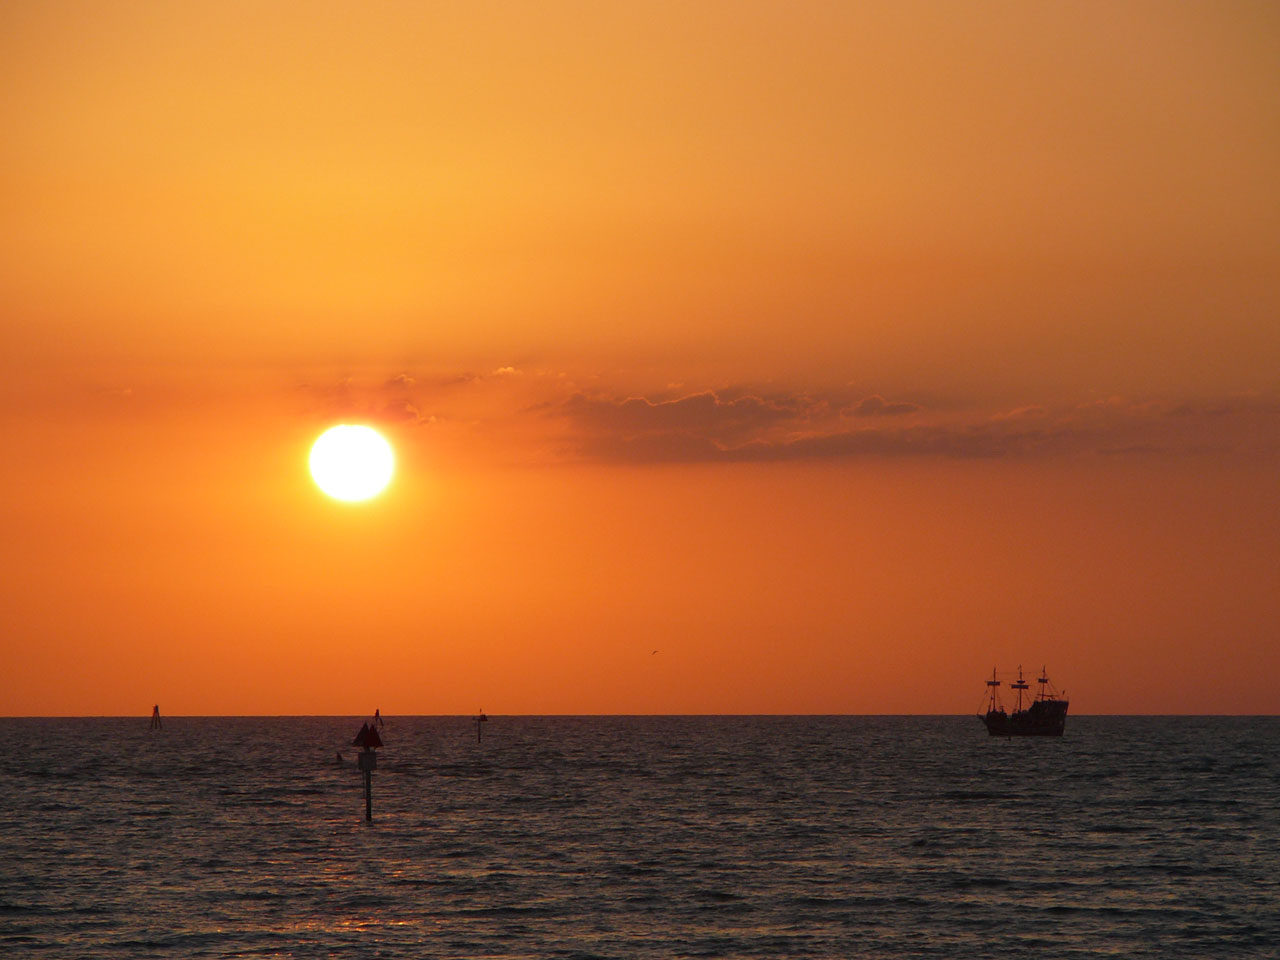 Ship sailing into the sunset